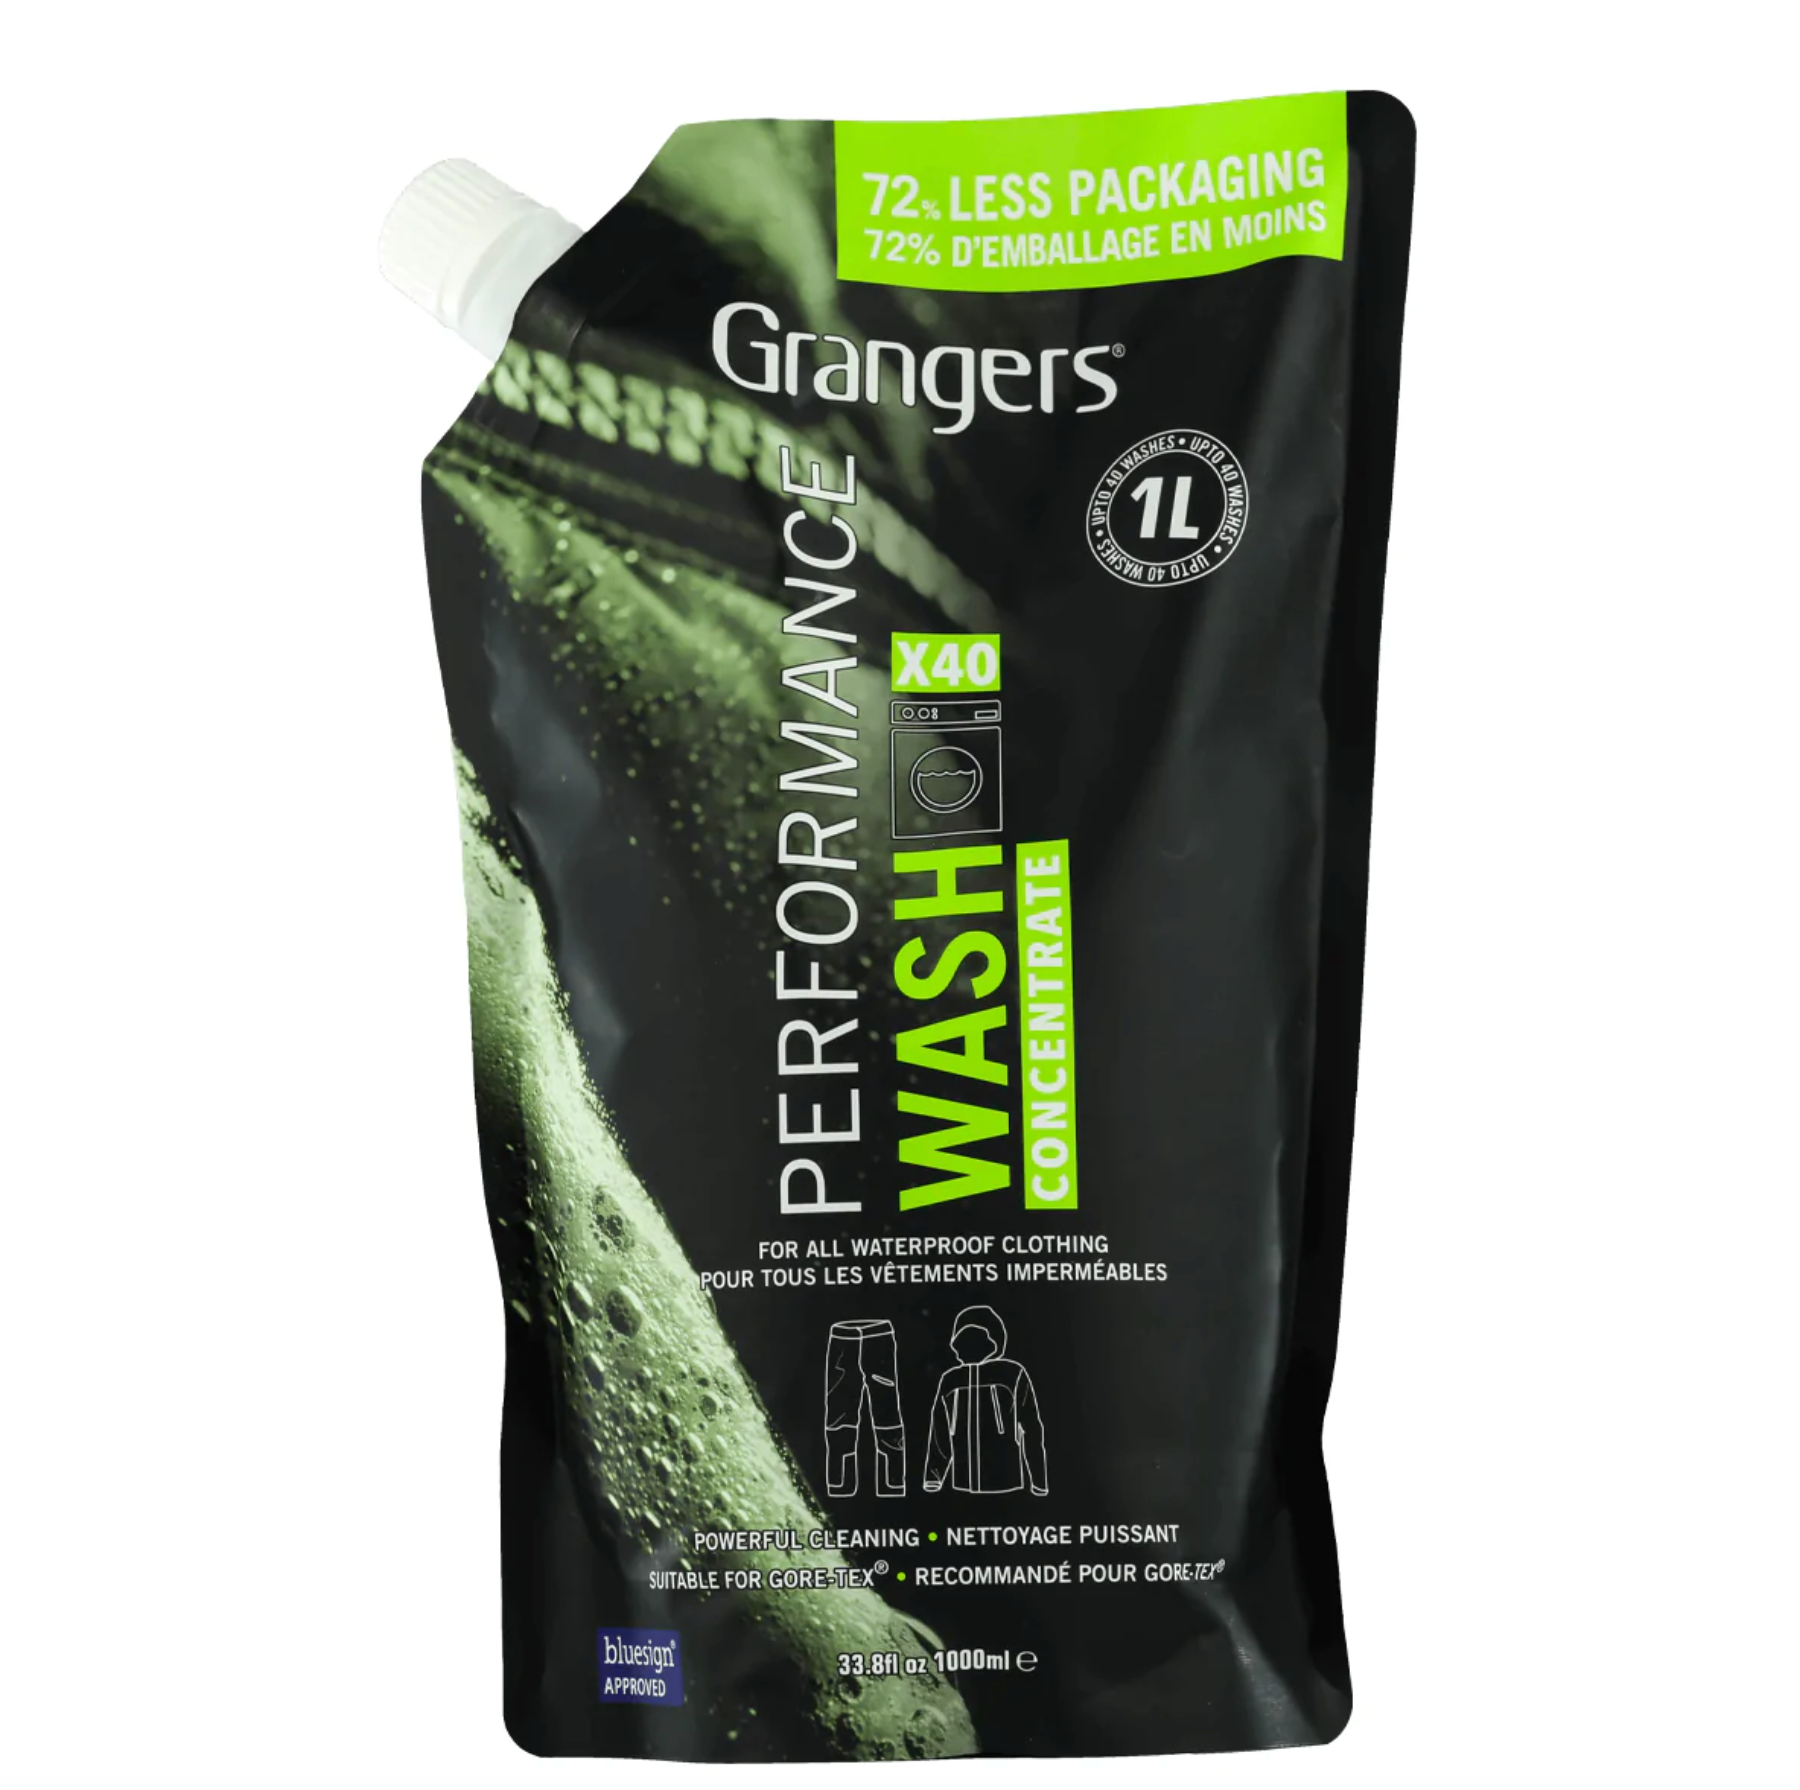 Grangers Performance Wash 1L Eco pouch